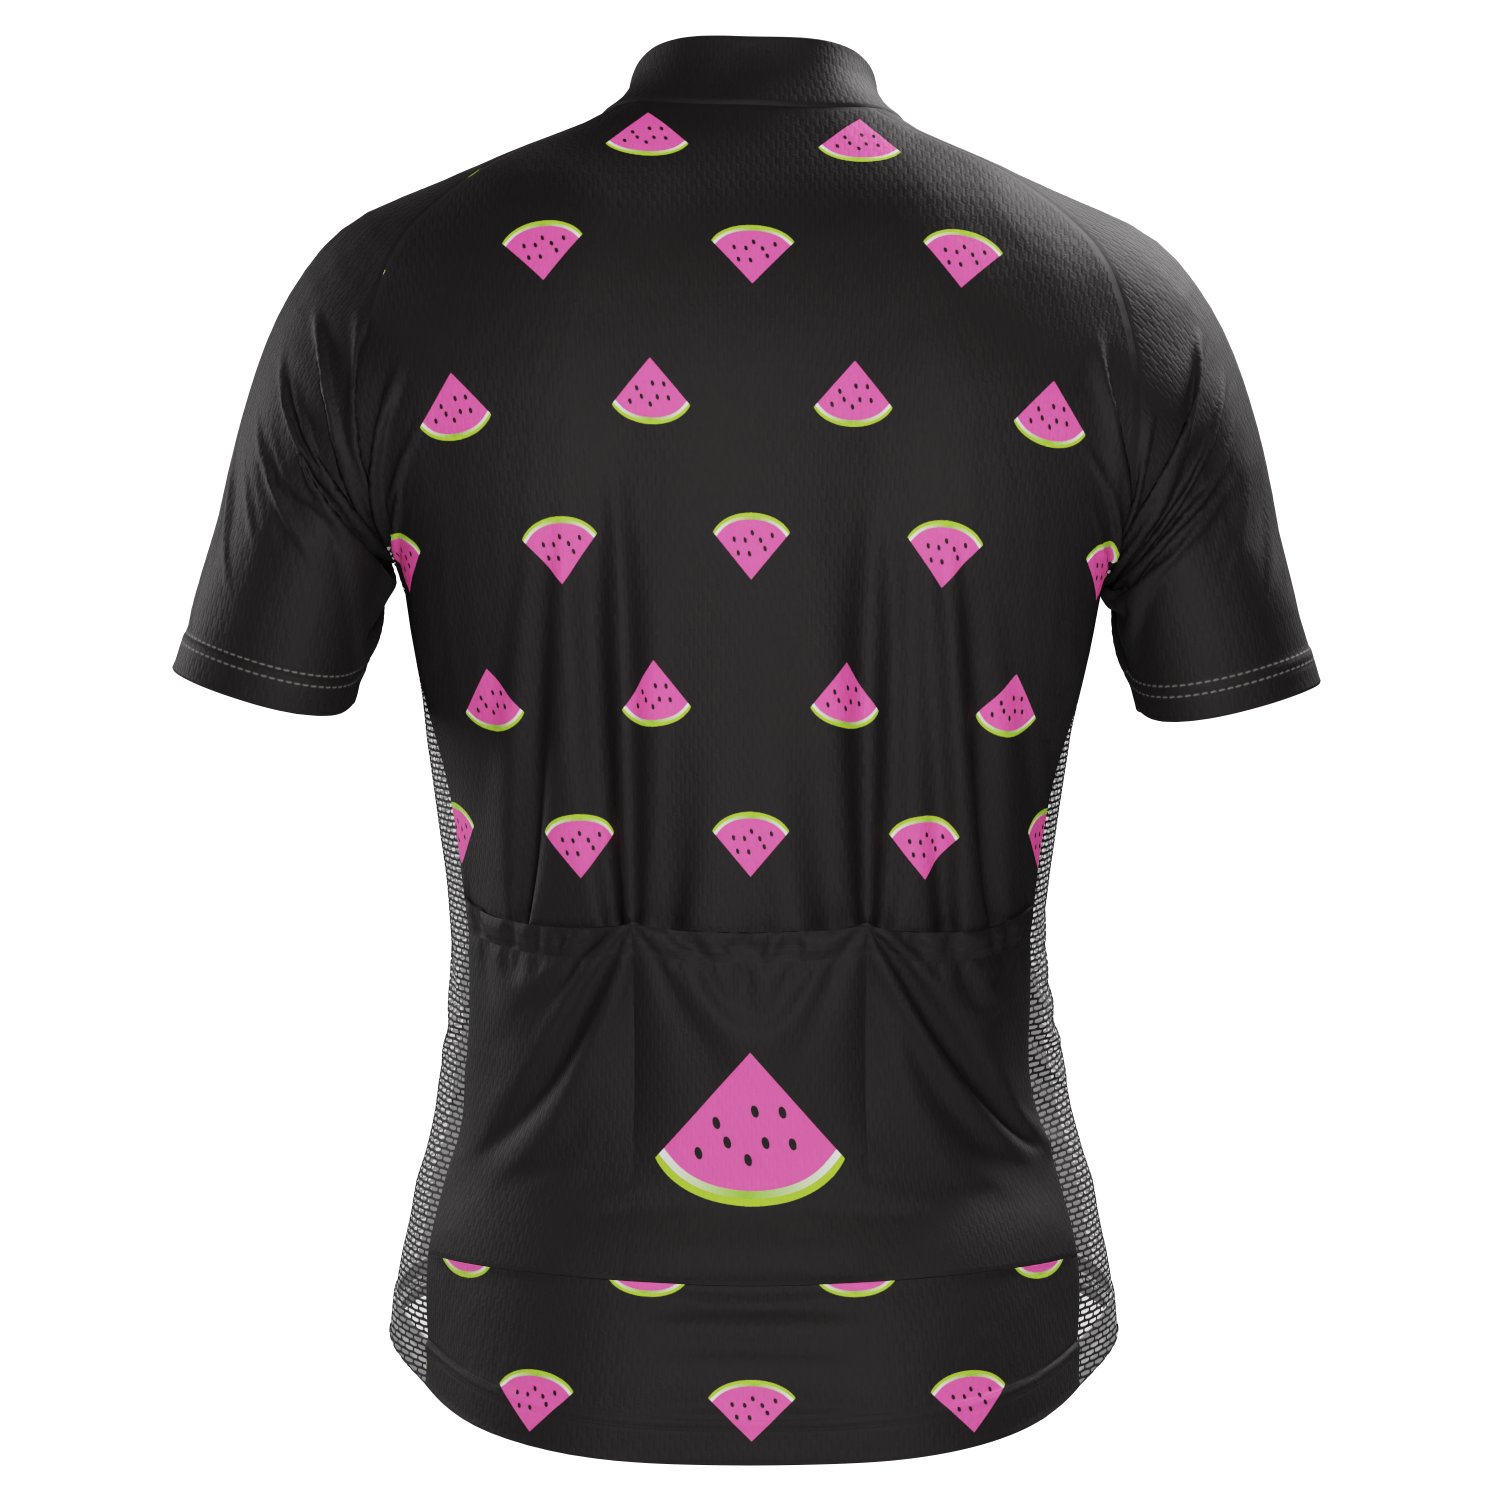 Men's Watermelon Black Short Sleeve Cycling Jersey